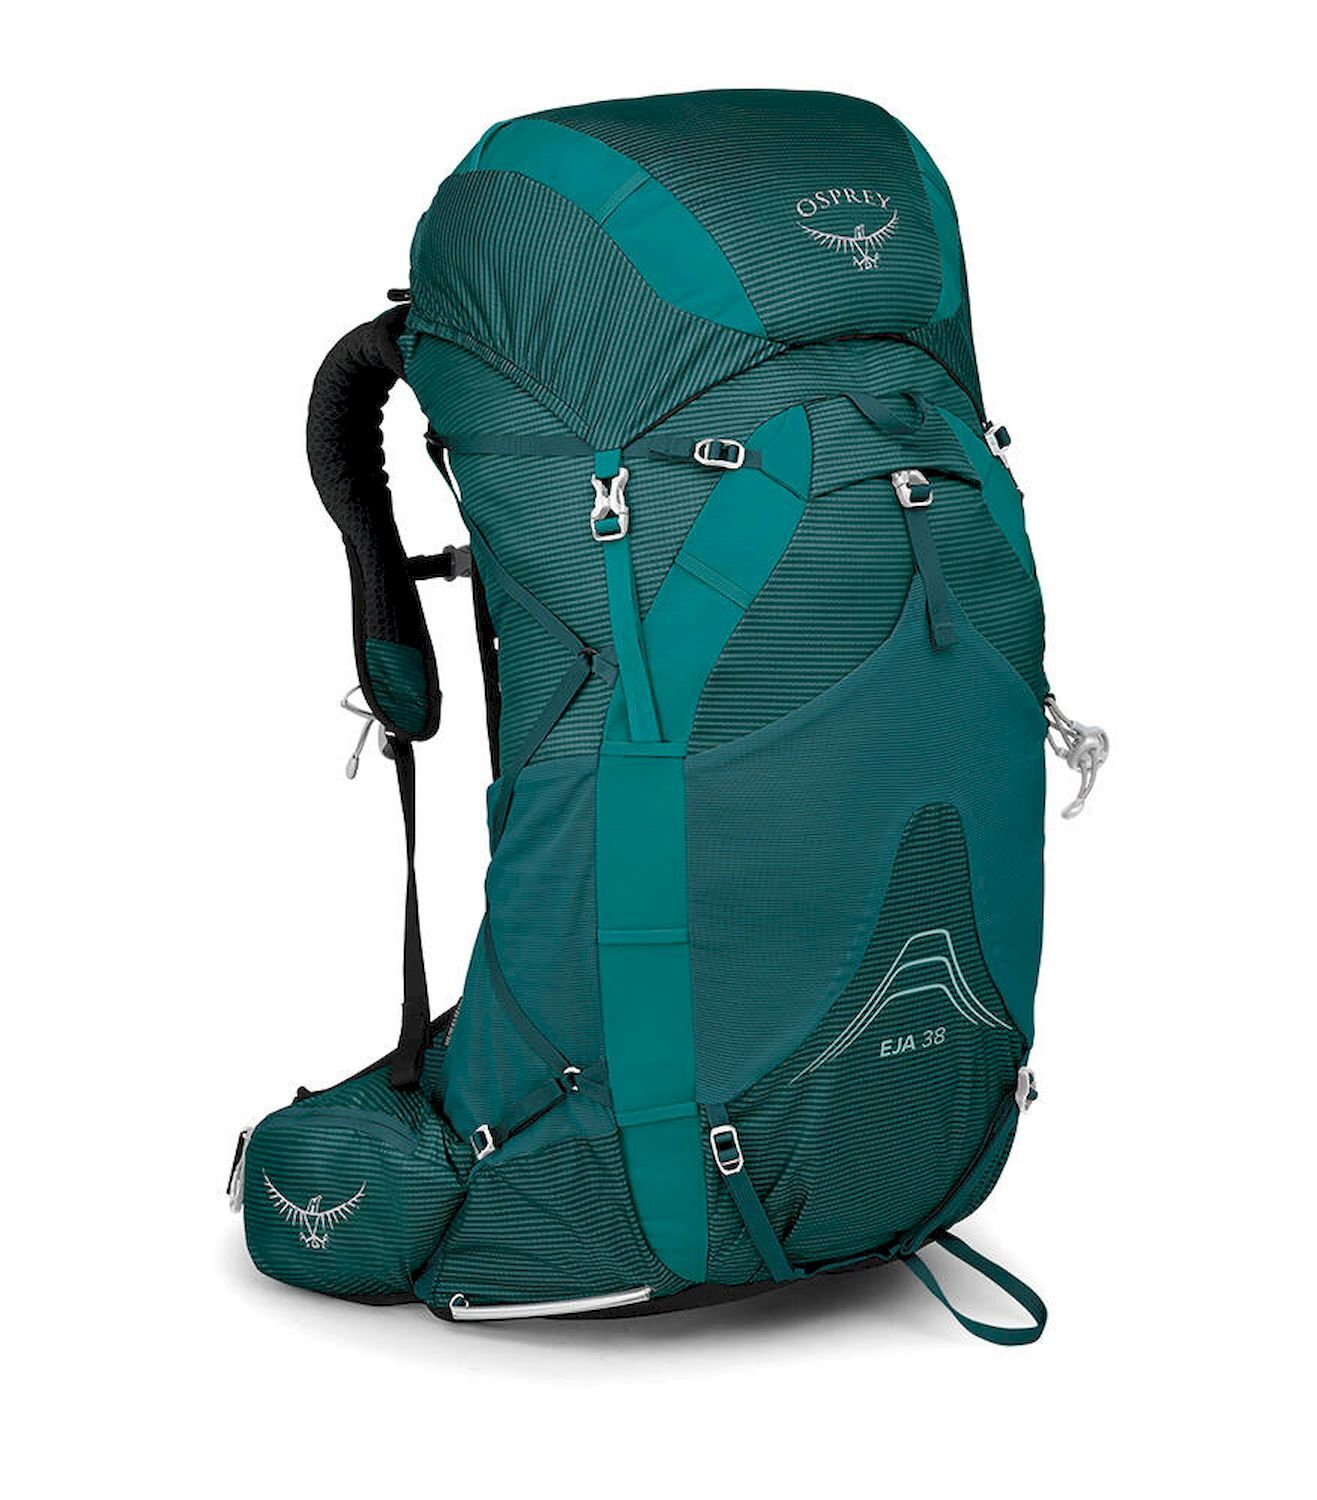 Osprey Eja 38 - Hiking backpack - Women's